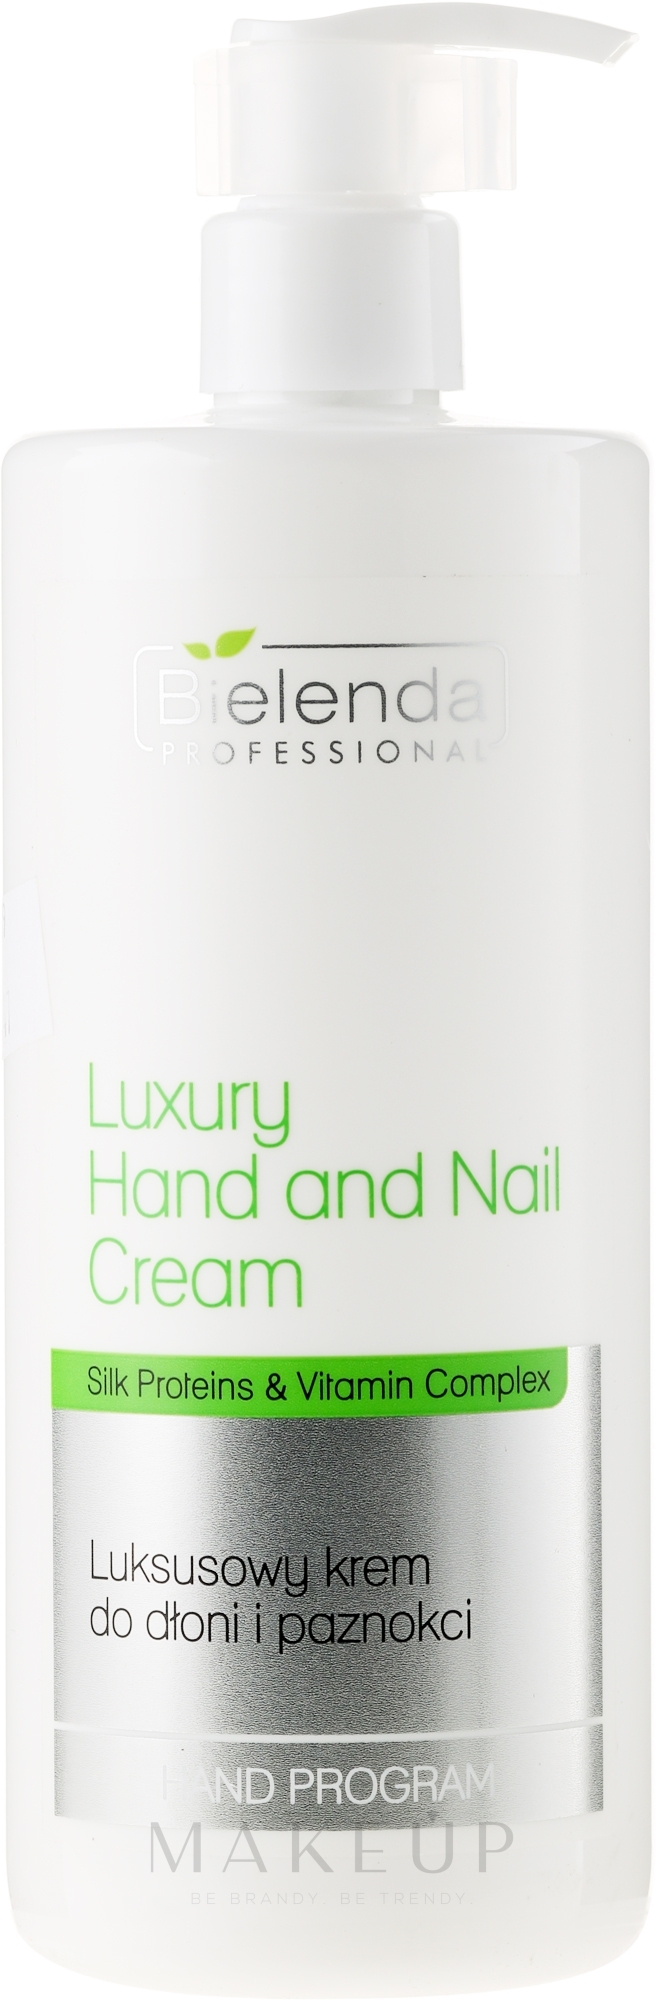 Hand- und Nagelcreme - Bielenda Professional Luxury Hand and Nail Cream — Foto 500 ml